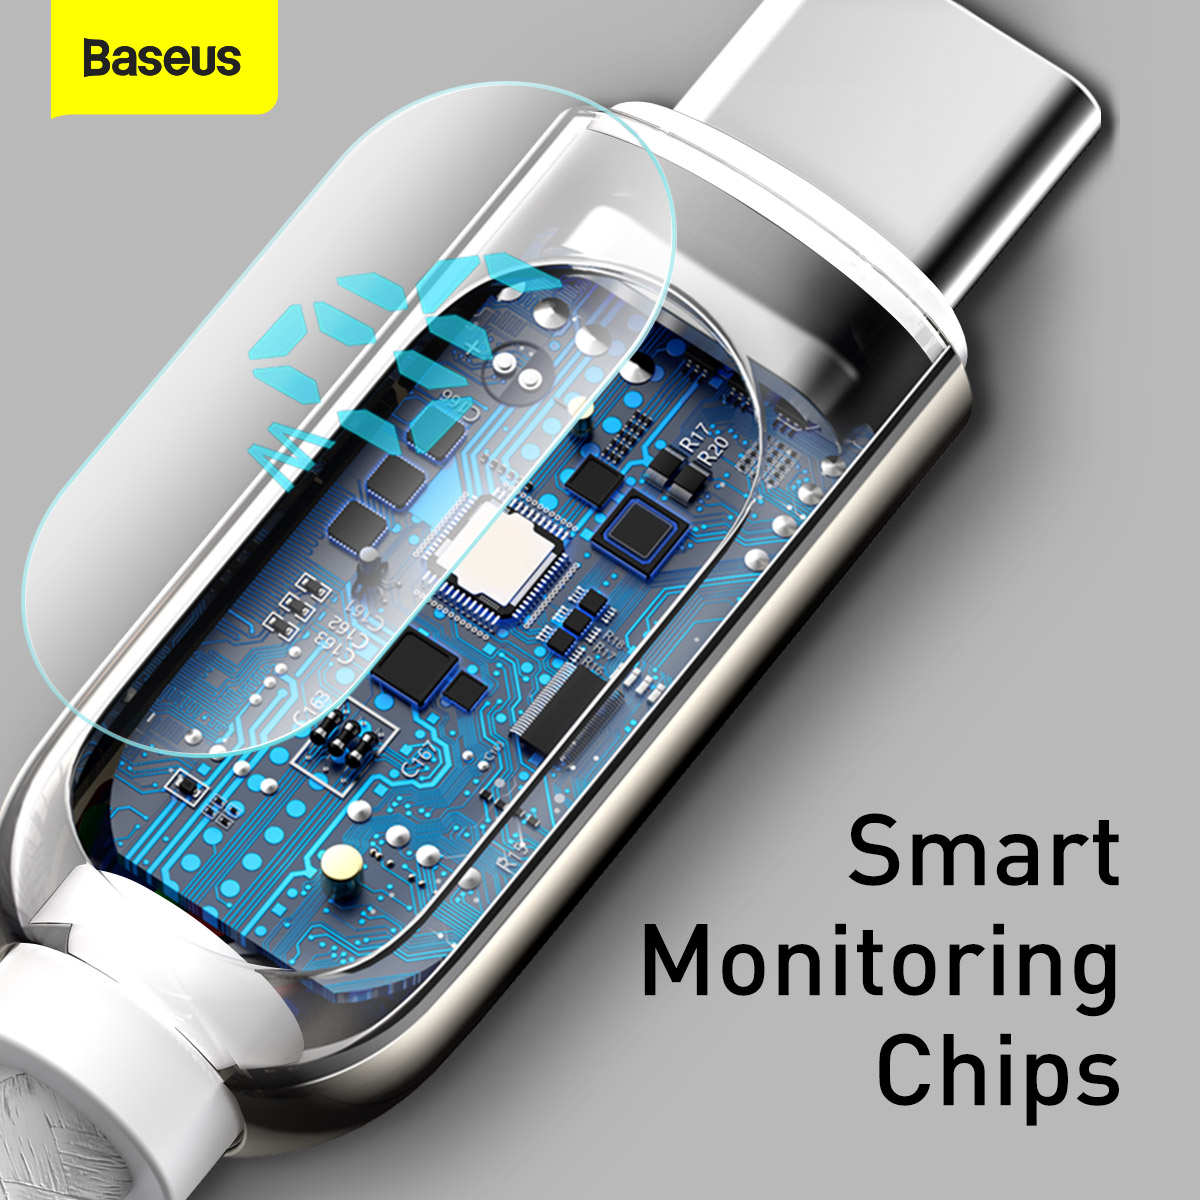 Baseus Display USB till USB-C kabel, snabbladdning, 5A, 1m, vit